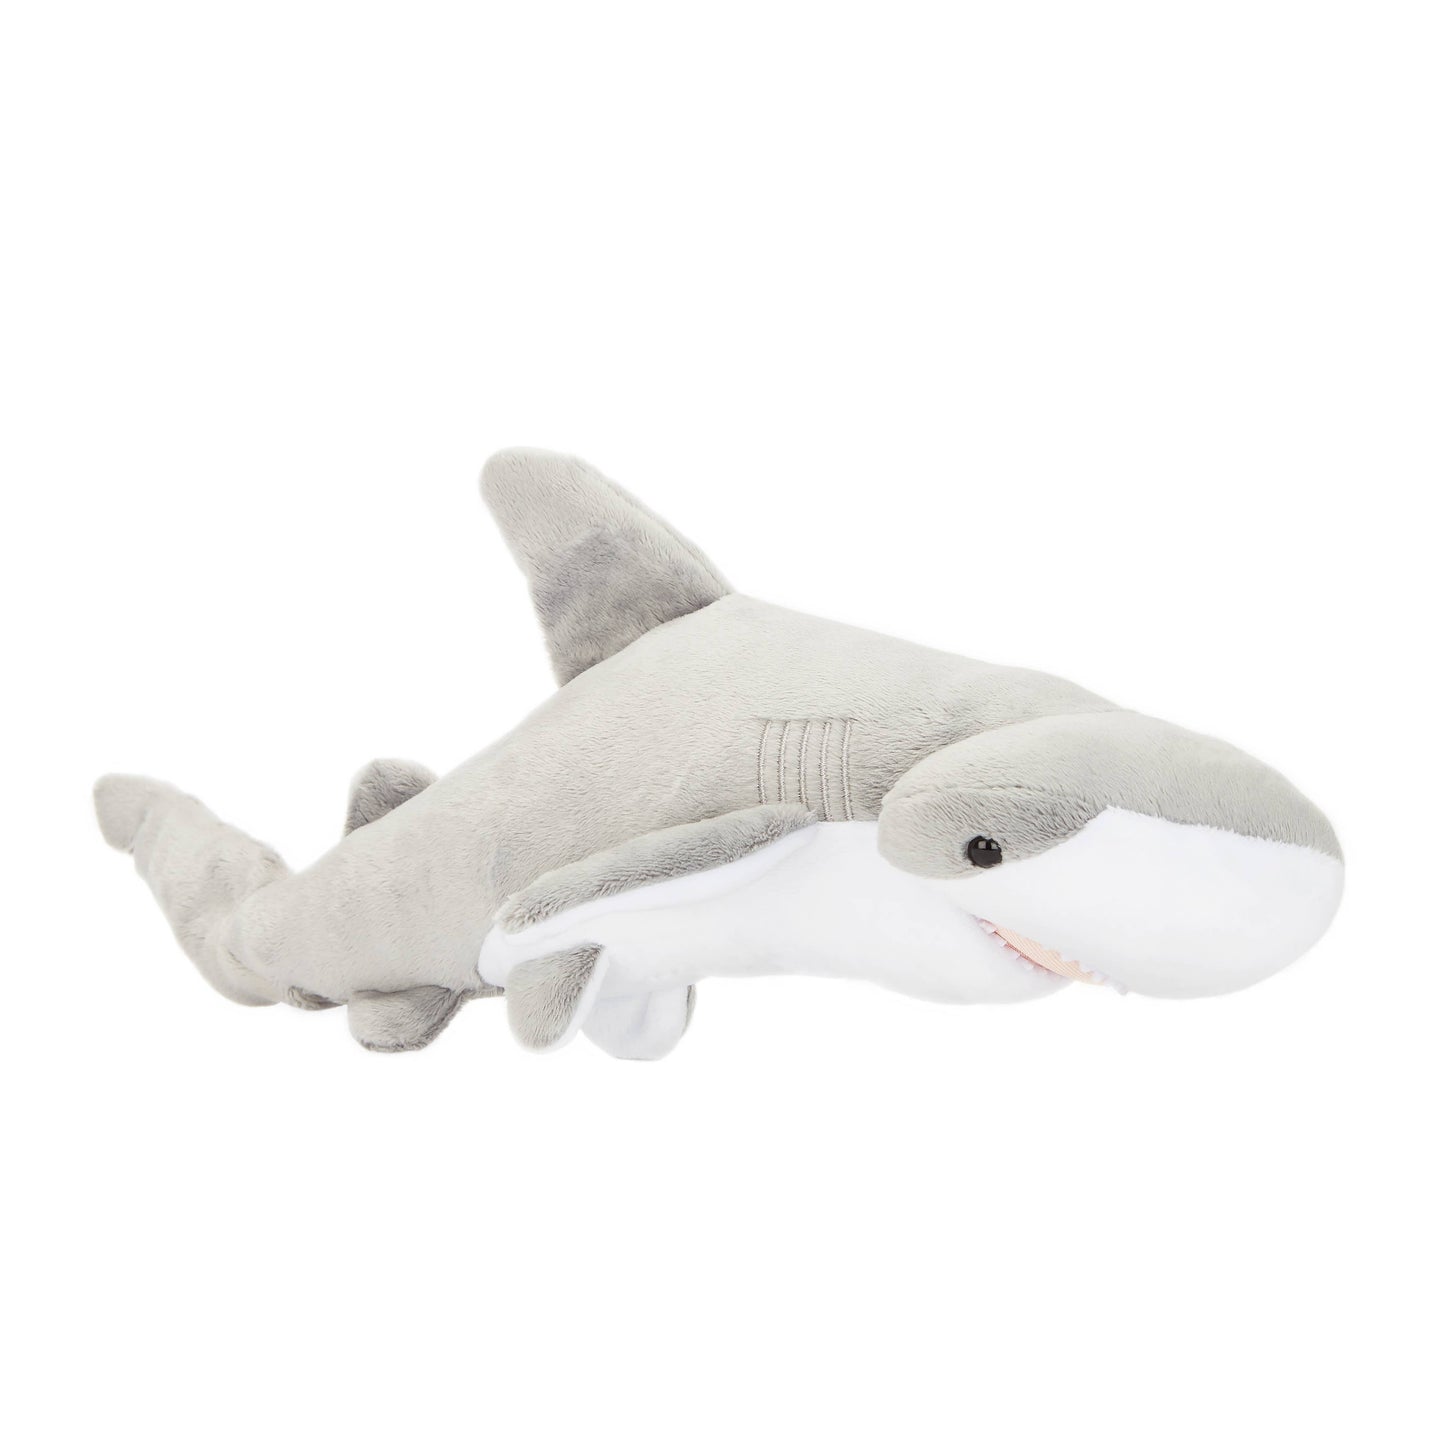 Wildlife Tree - 16" Bonnethead Shark Stuffed Animal